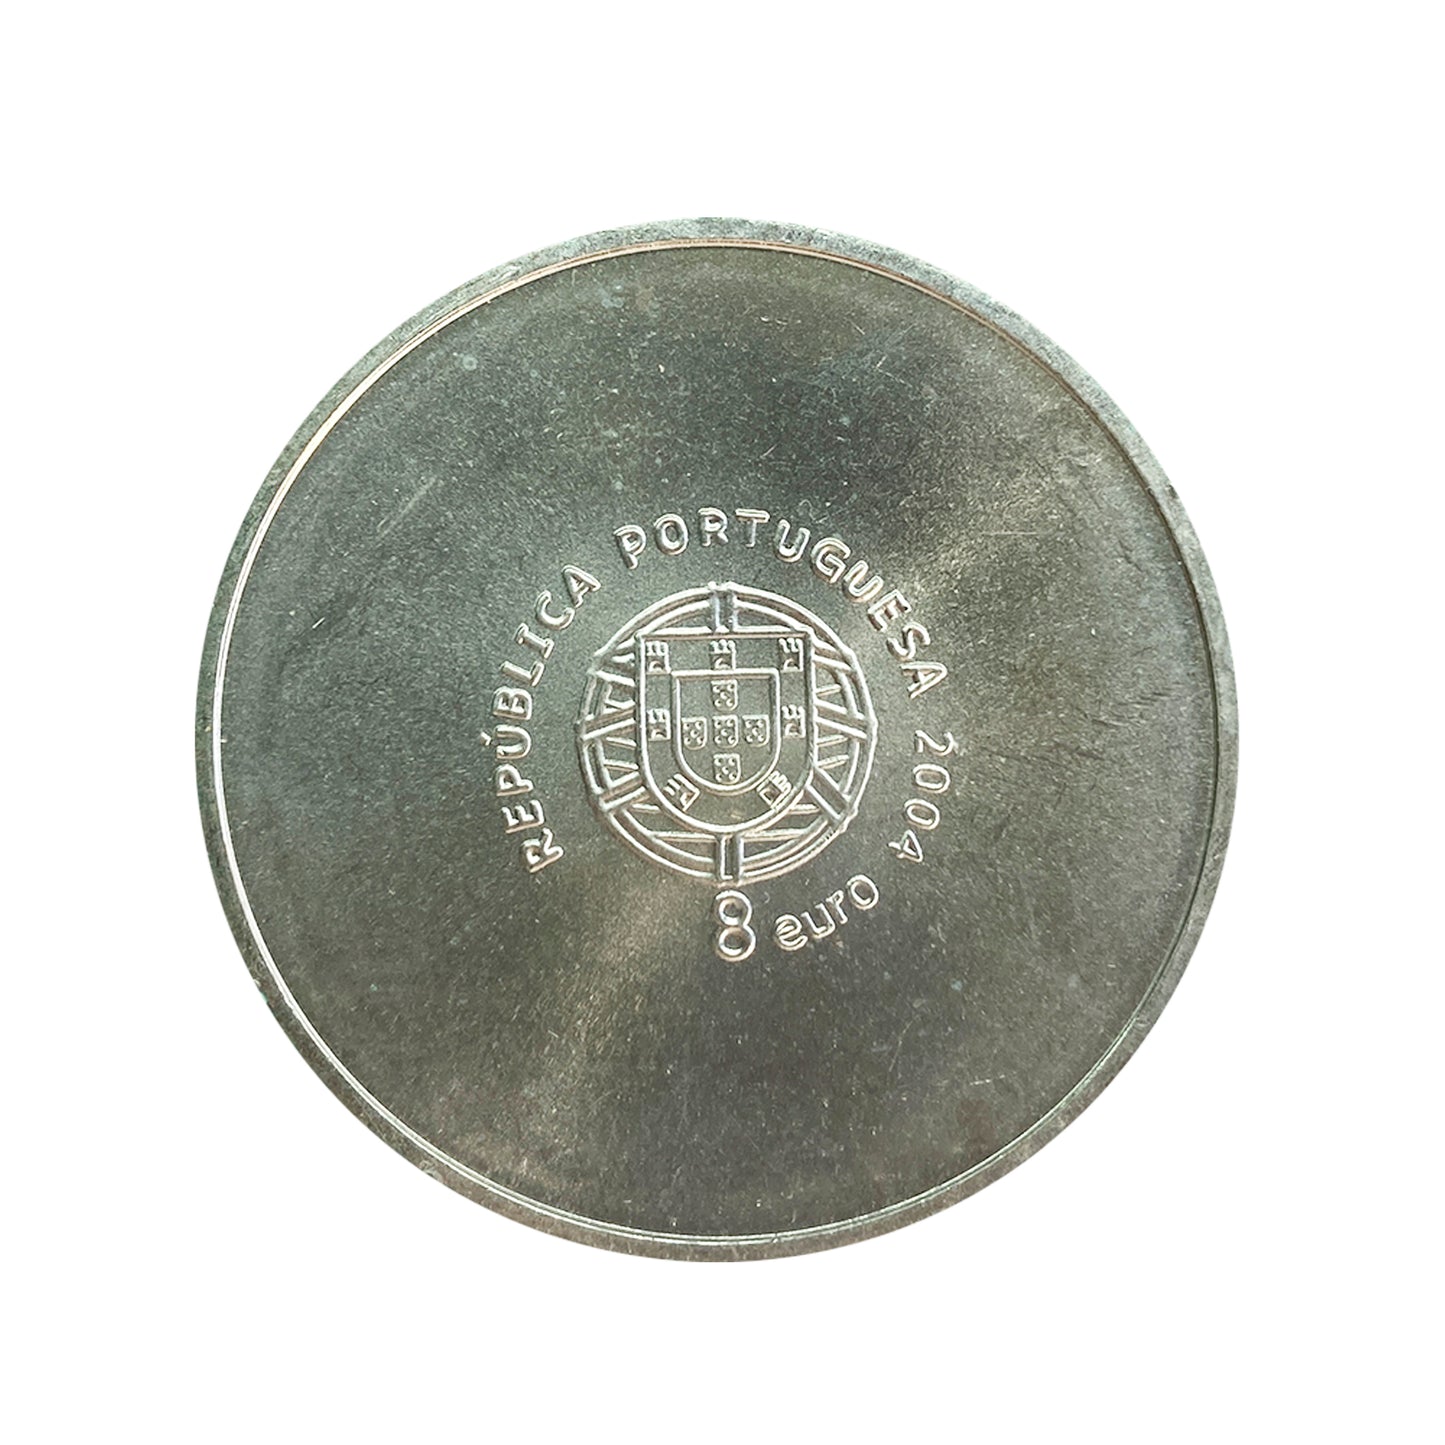 Portugal - Moneda 8 euros en plata 2004 - UEFA El Gol